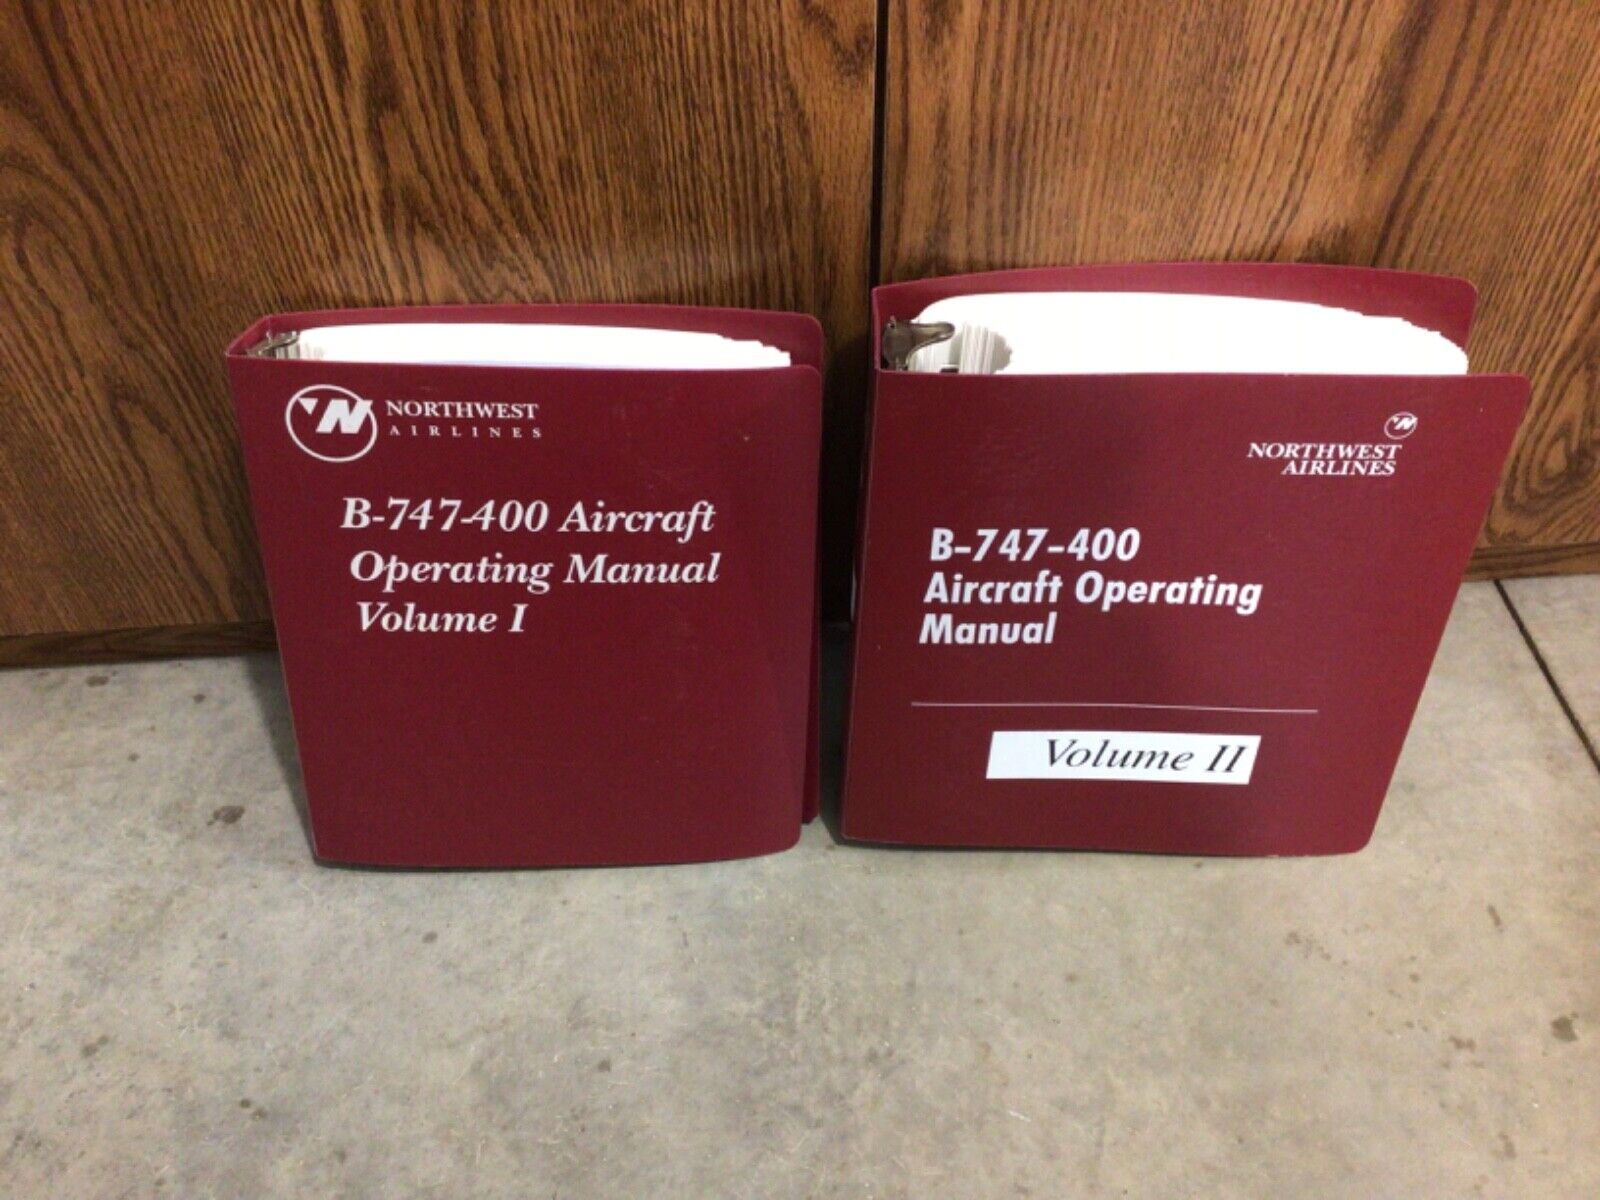 RARE Northwest Airlines B-747-400 Aircraft Operating Manuals volume I & II